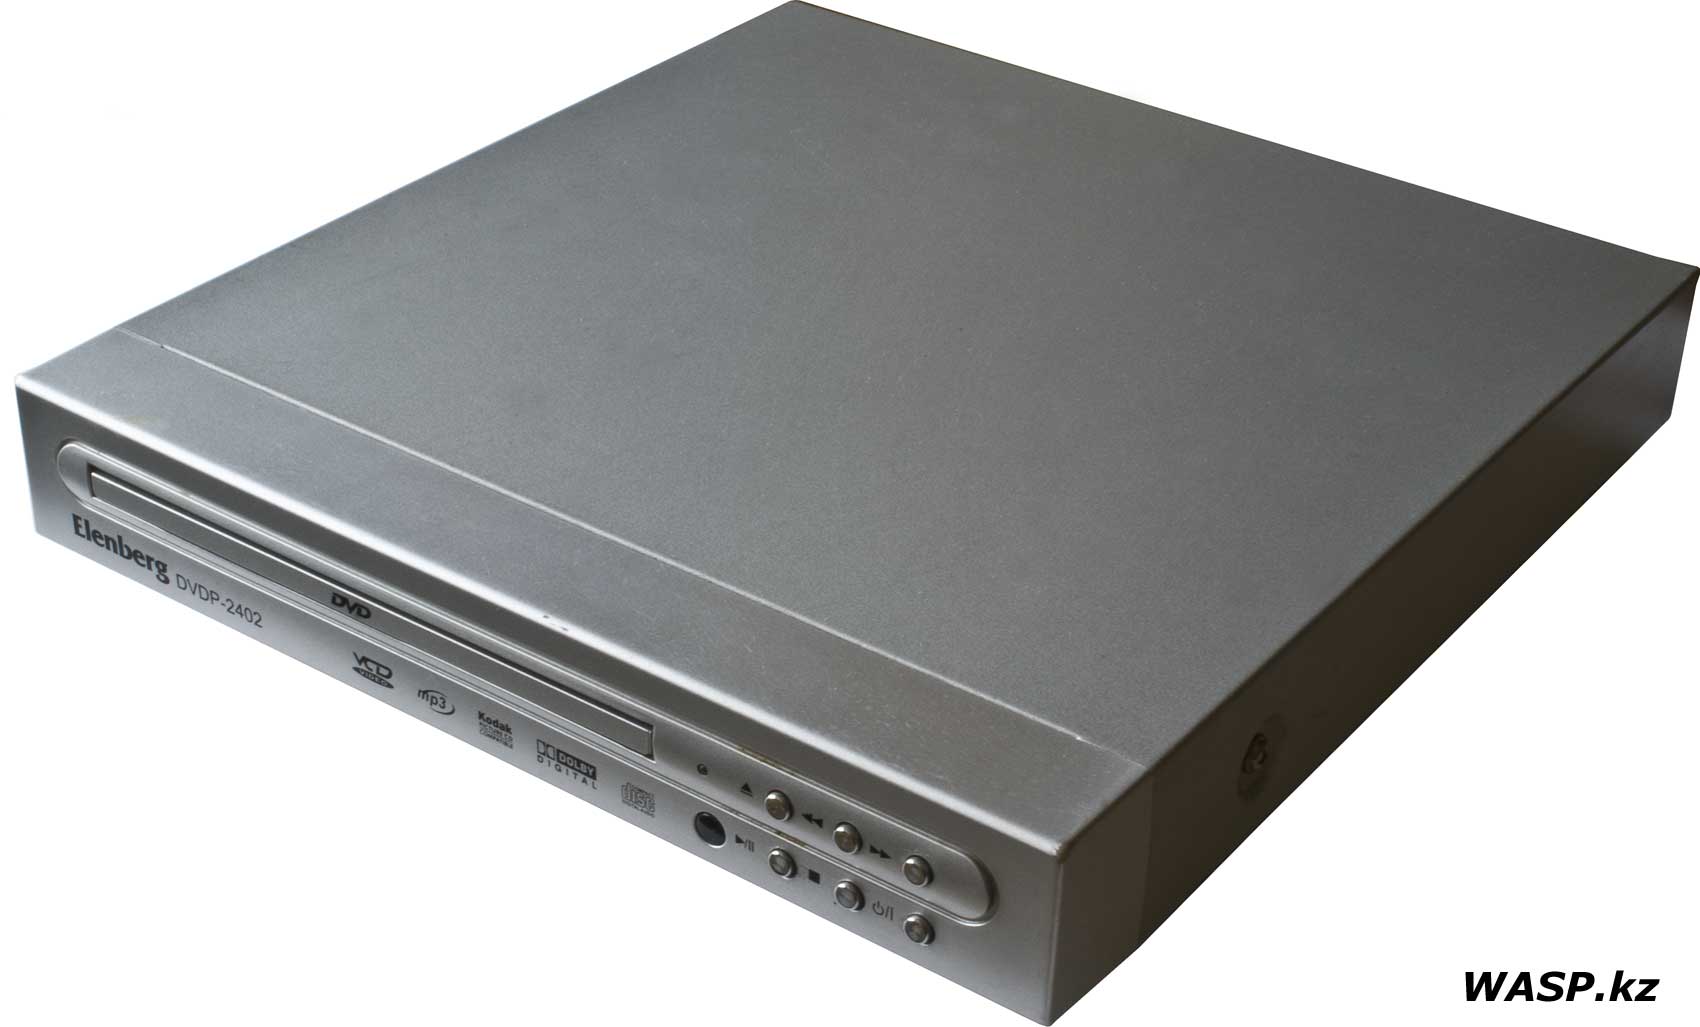 Elenberg DVDP-2402 DVD-плеер, обзор